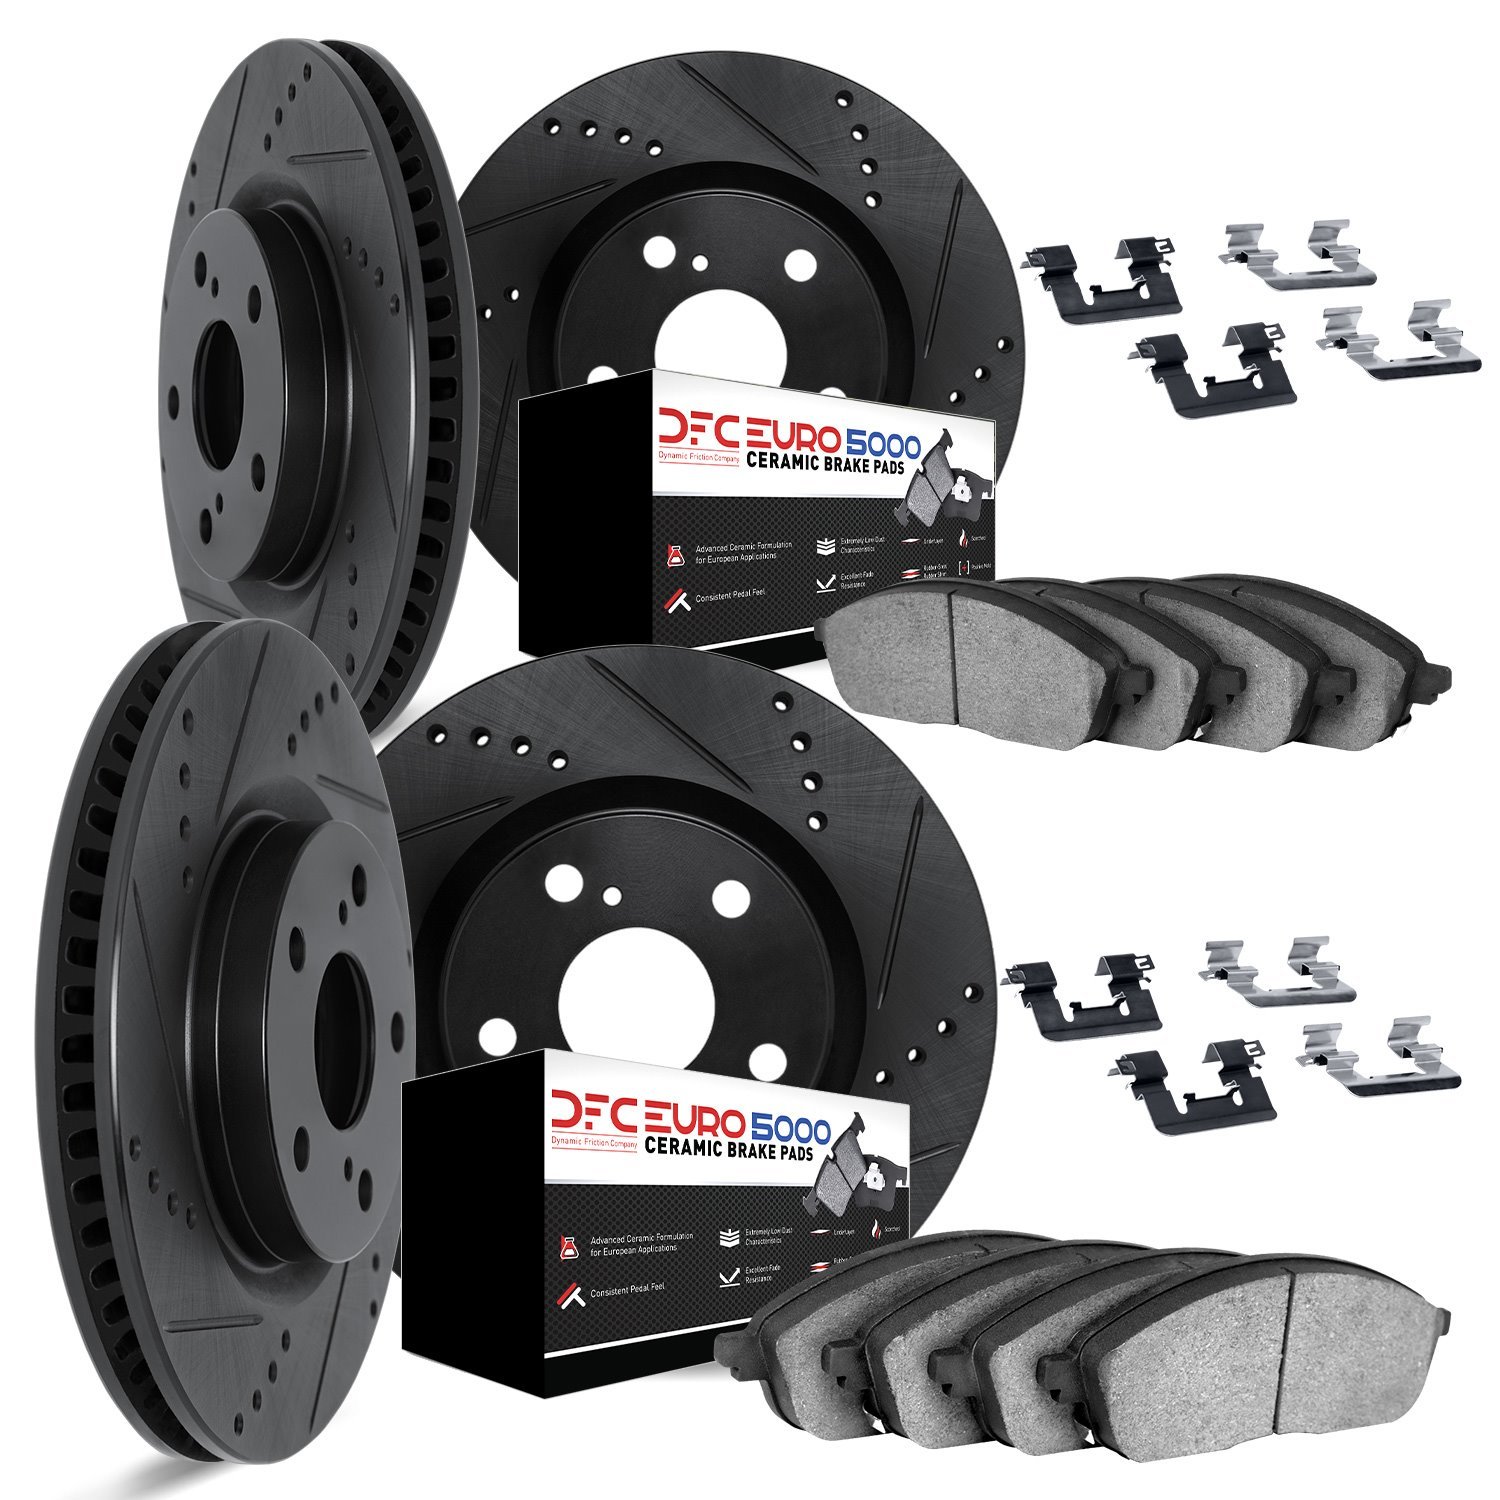 8614-45002 Drilled/Slotted Brake Rotors w/5000 Euro Ceramic Brake Pads Kit & Hardware [Black], 2010-2015 GM, Position: Front and